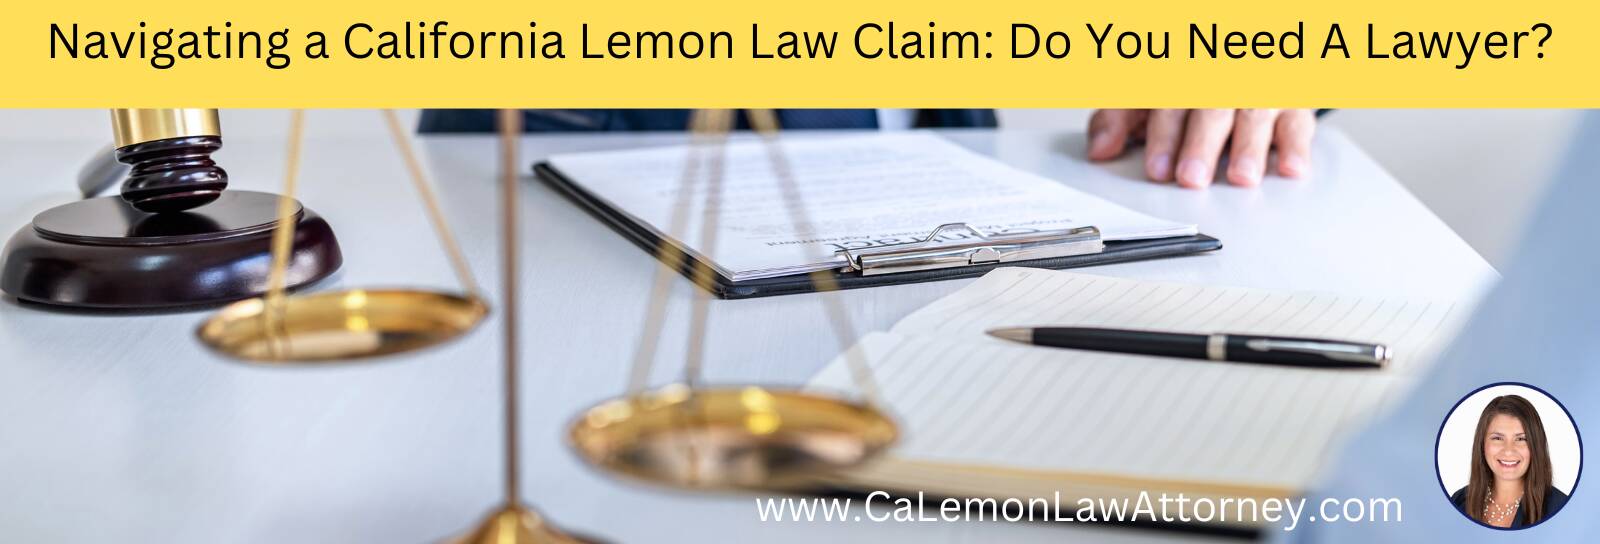 Navigating a California Lemon Law Claim: Do You Need a Lawyer?